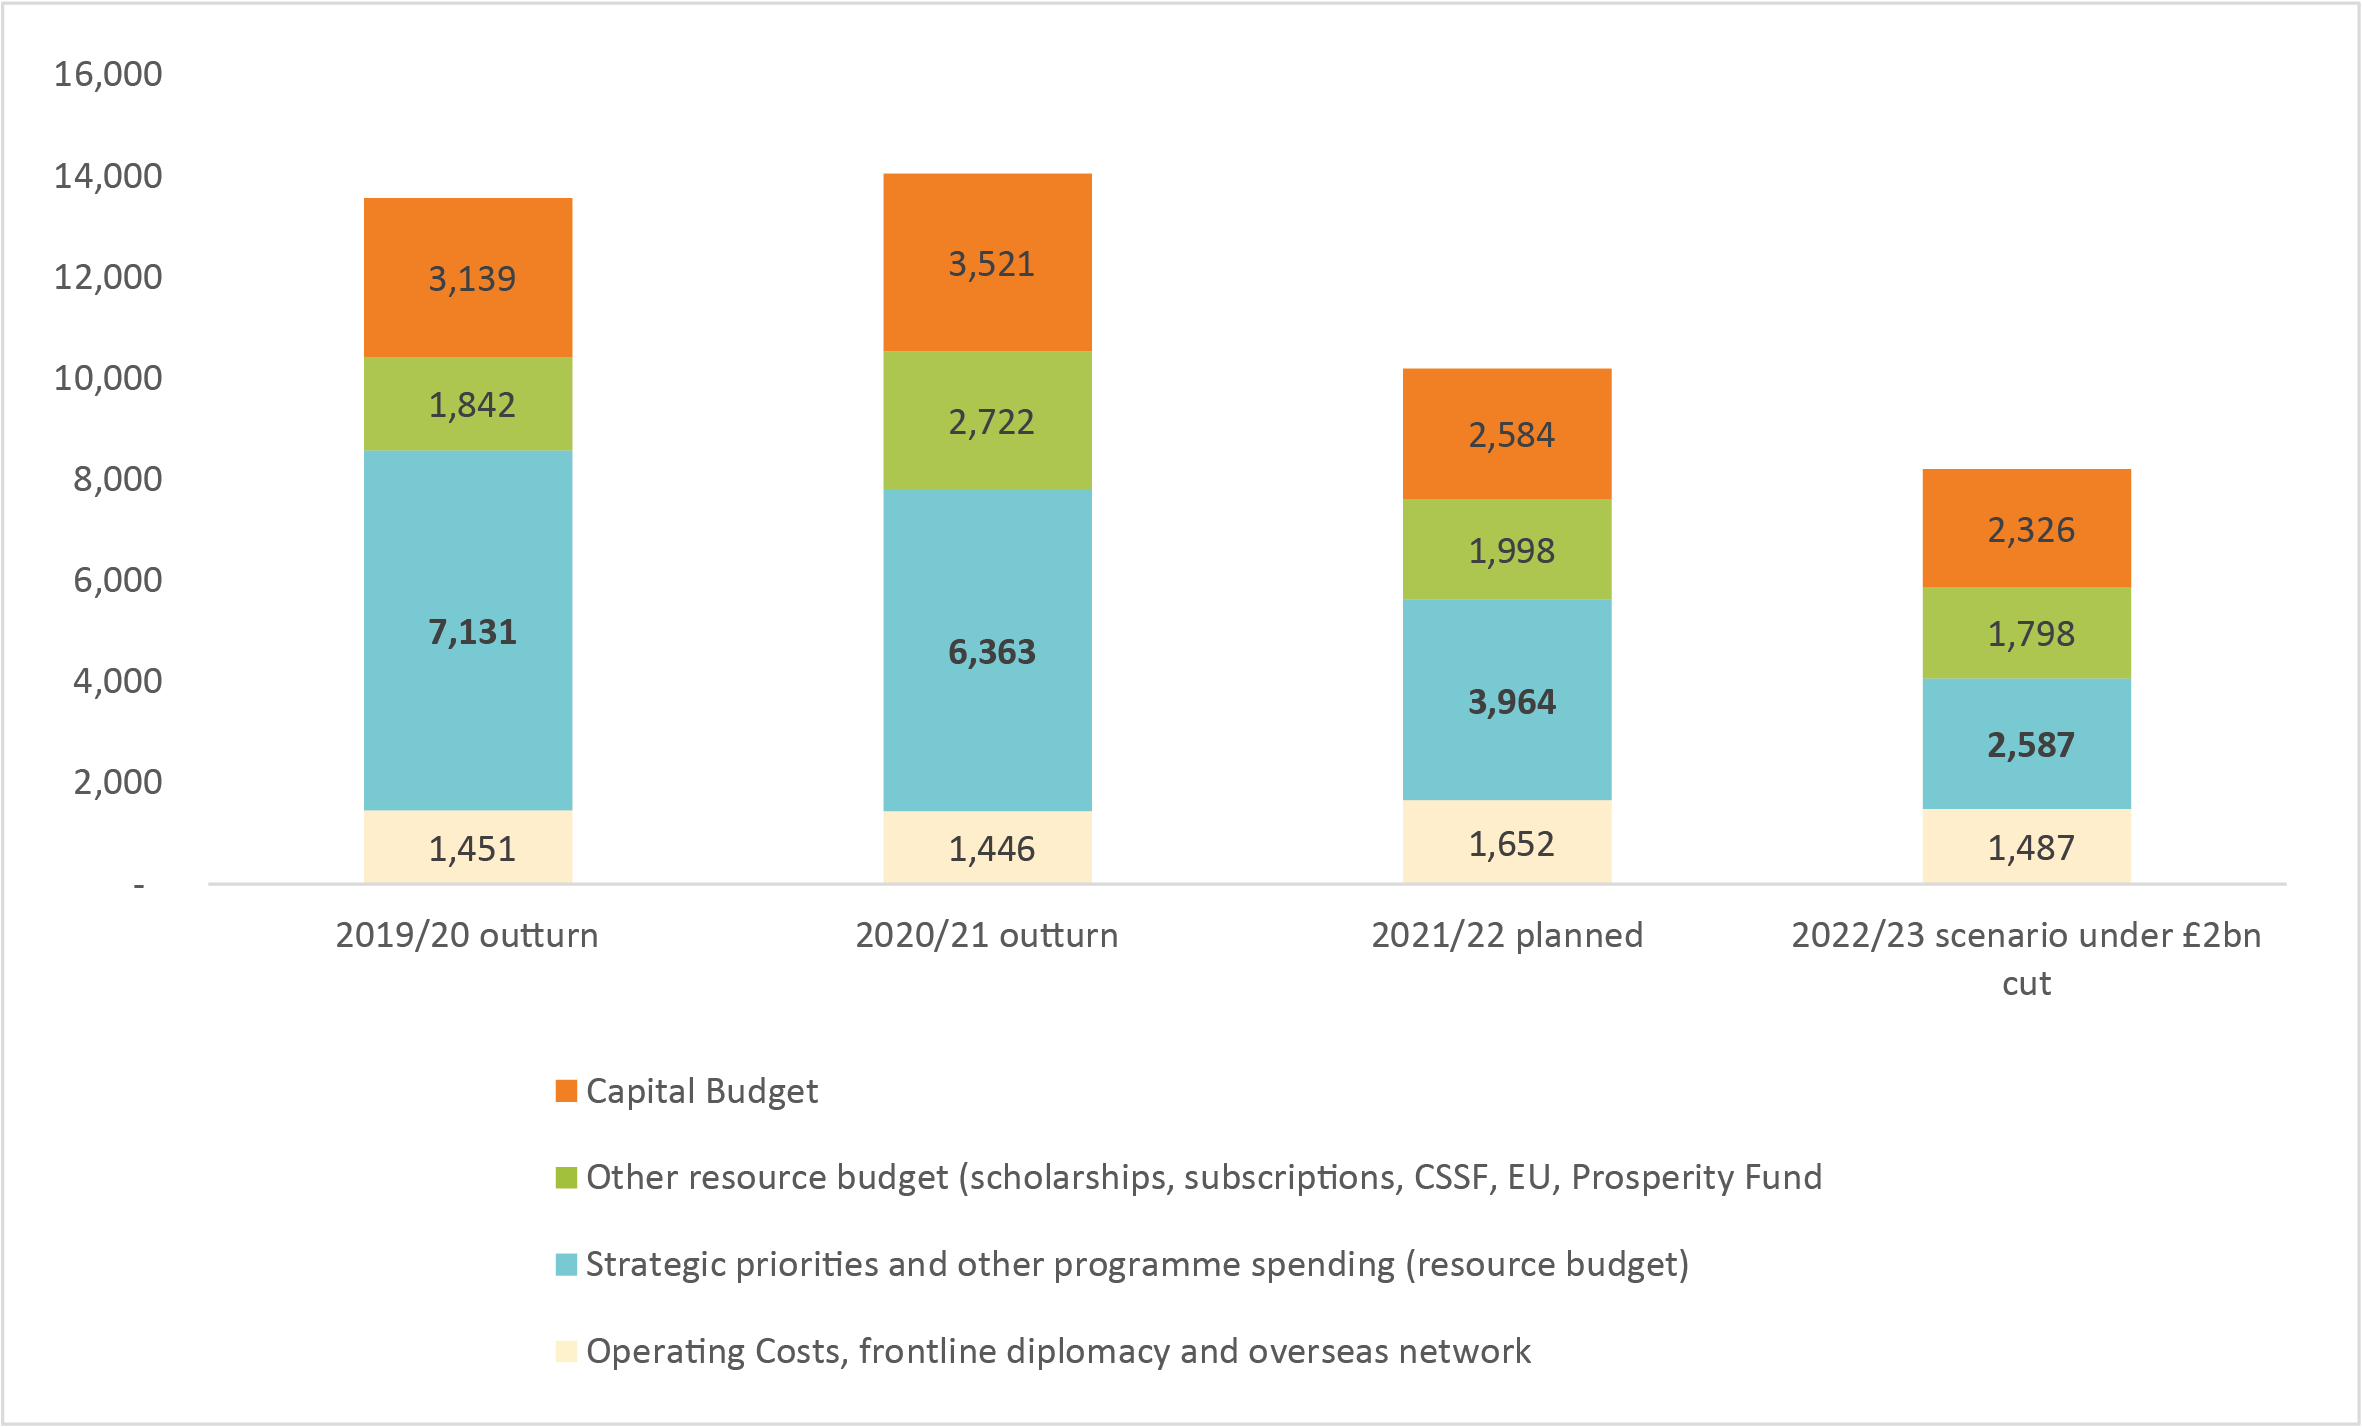 Annual FCDO budget allocations based on actuals and scenario, 2019/20 – 2022/23